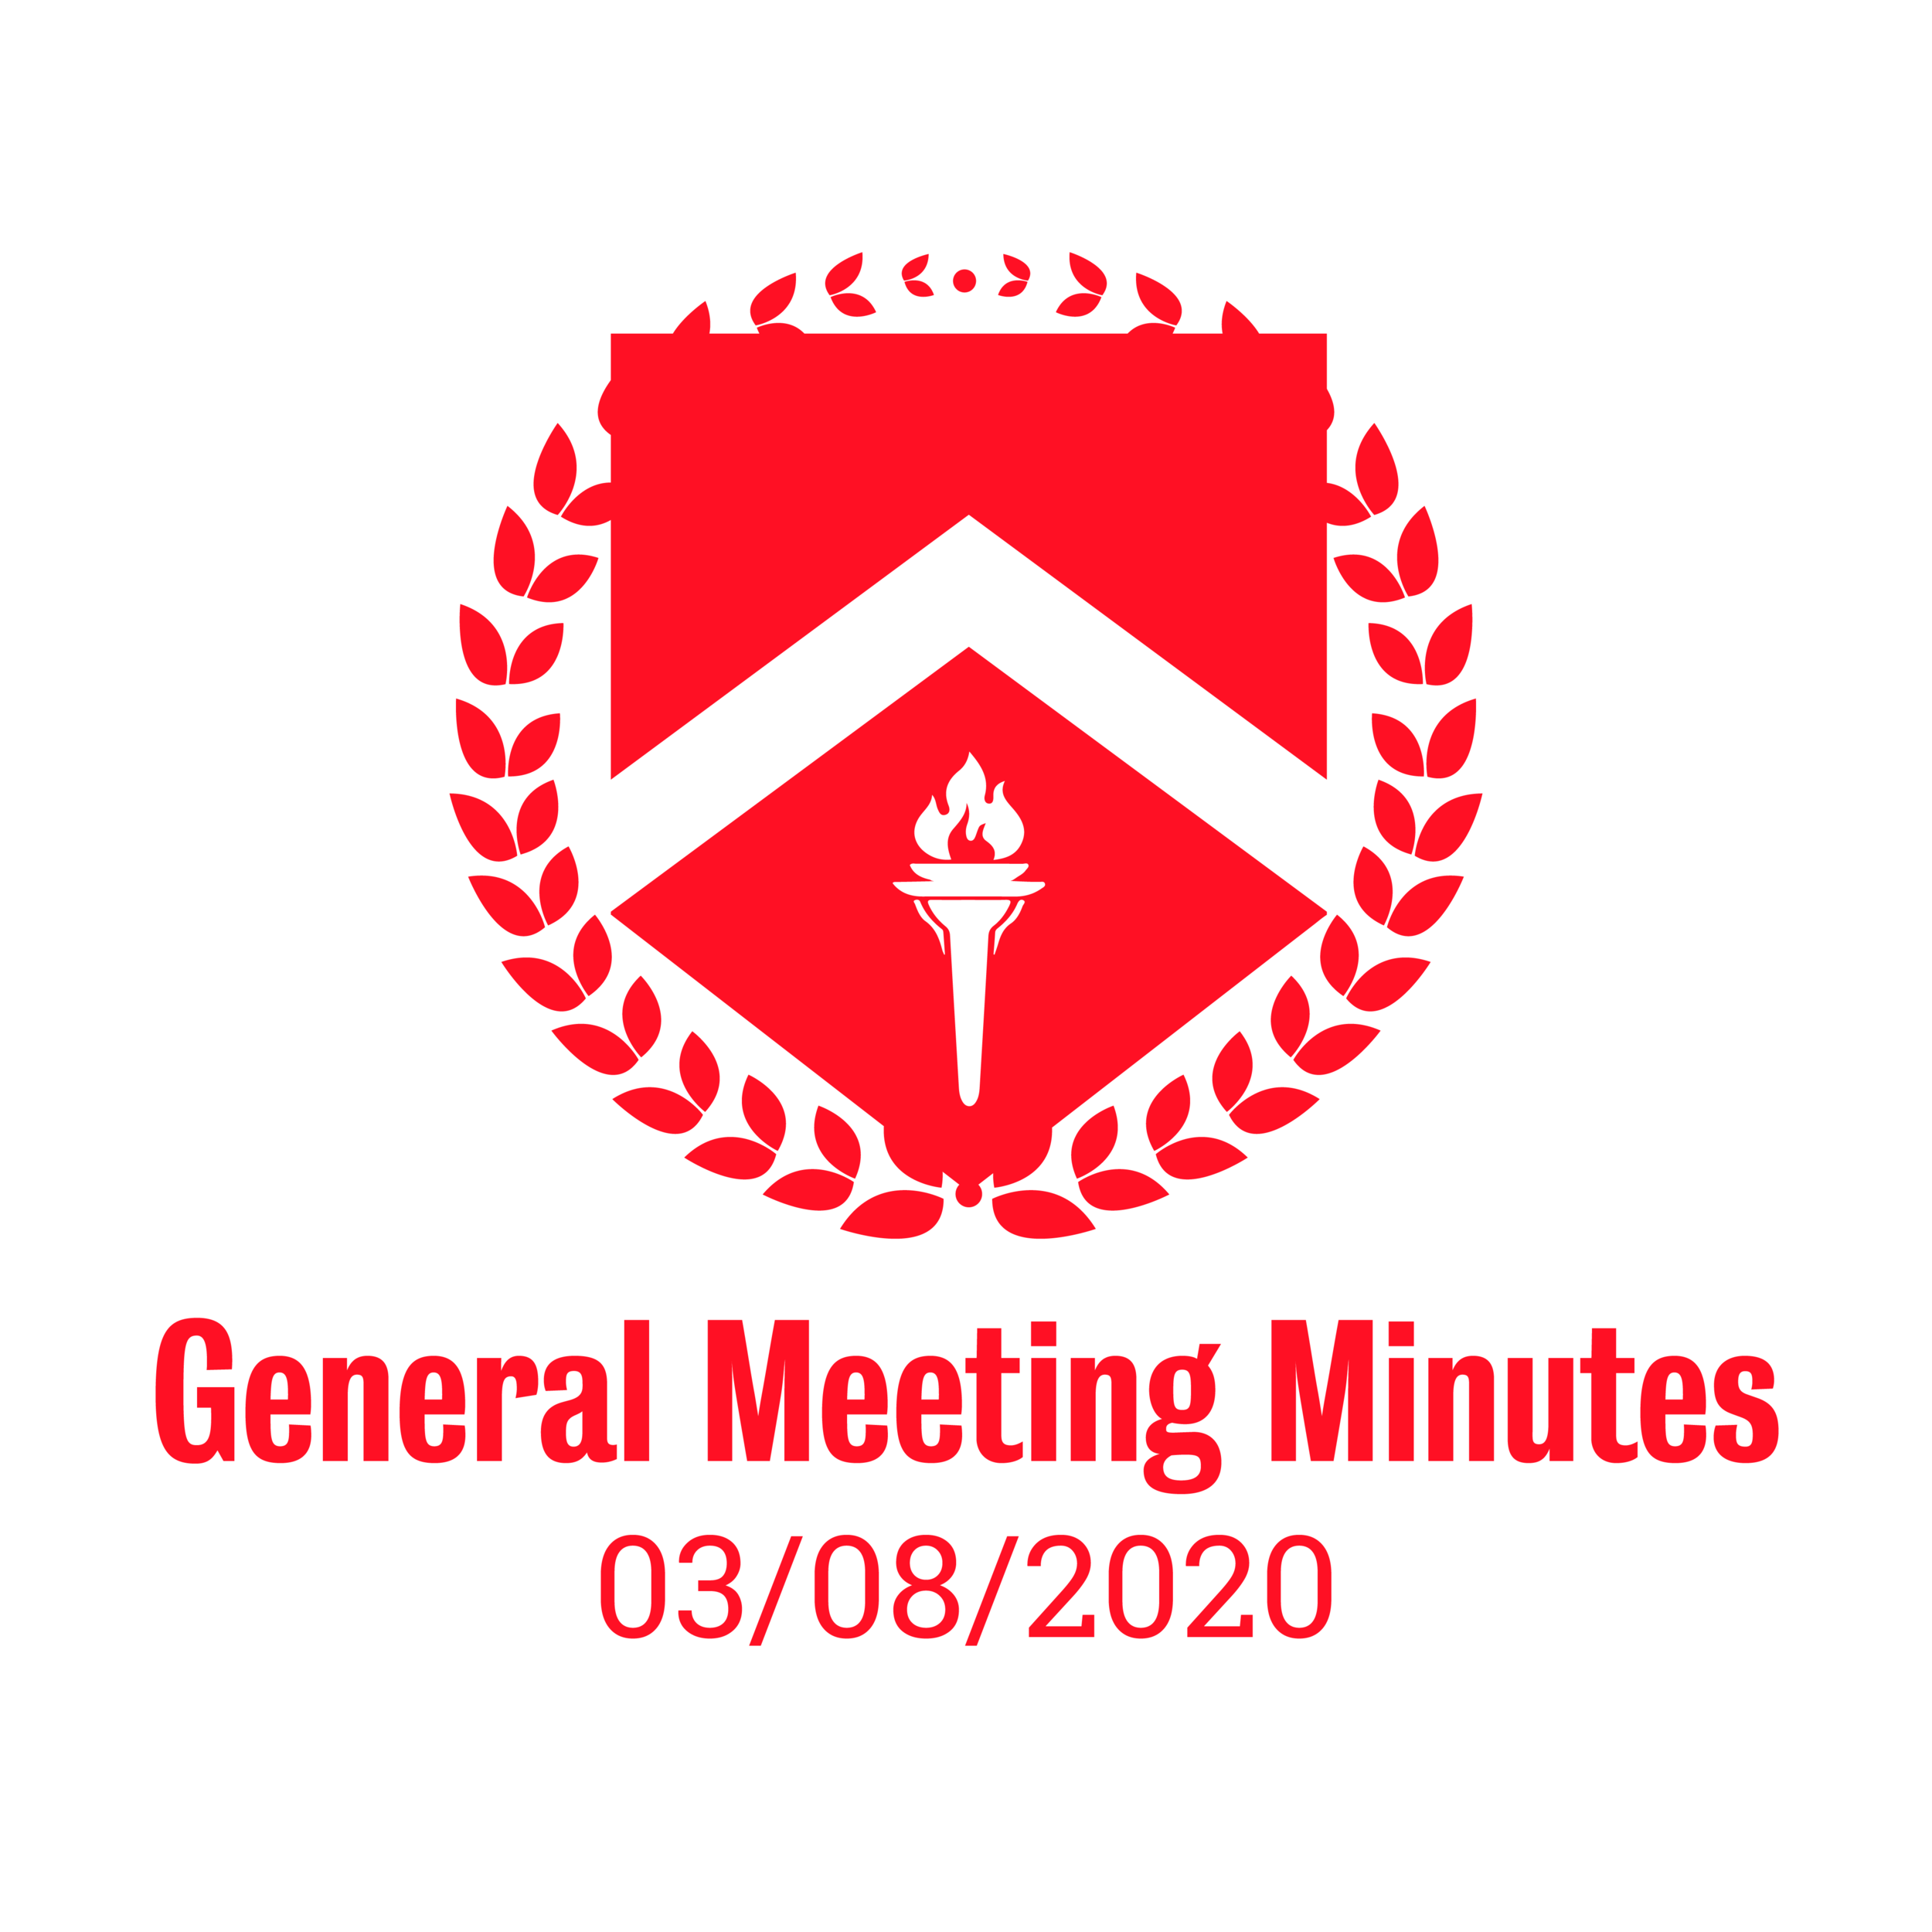 General Meeting Minutes 03/08/2020